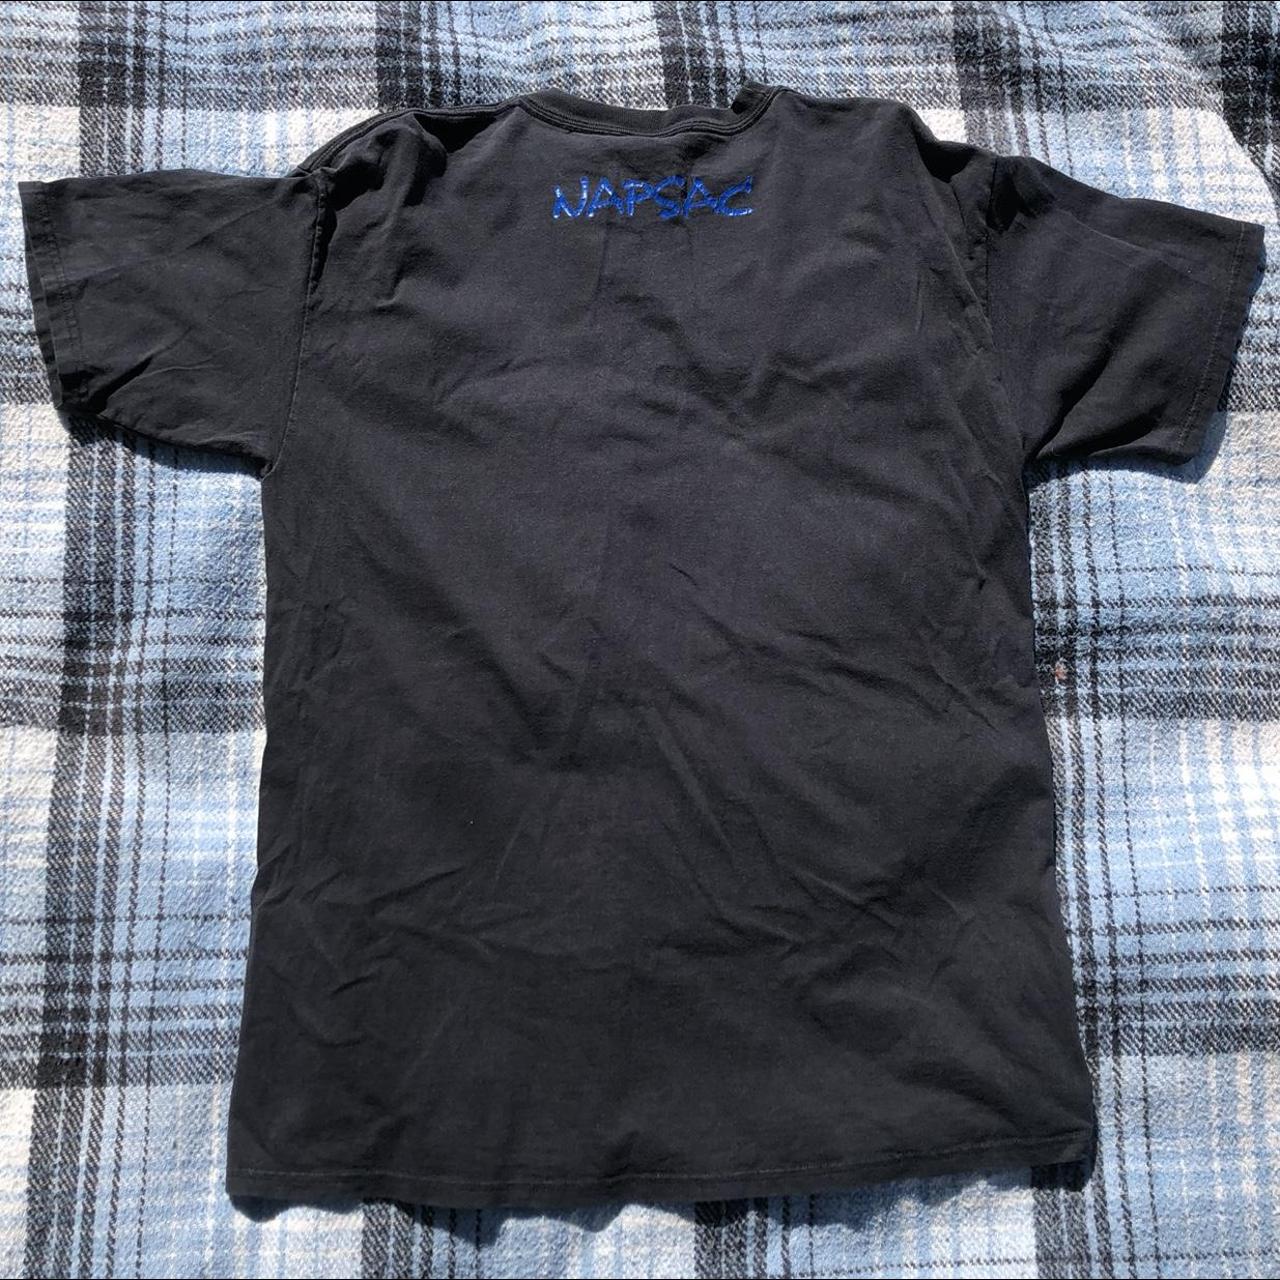 Orange County CA Angels T-Shirt – Napsac Shop